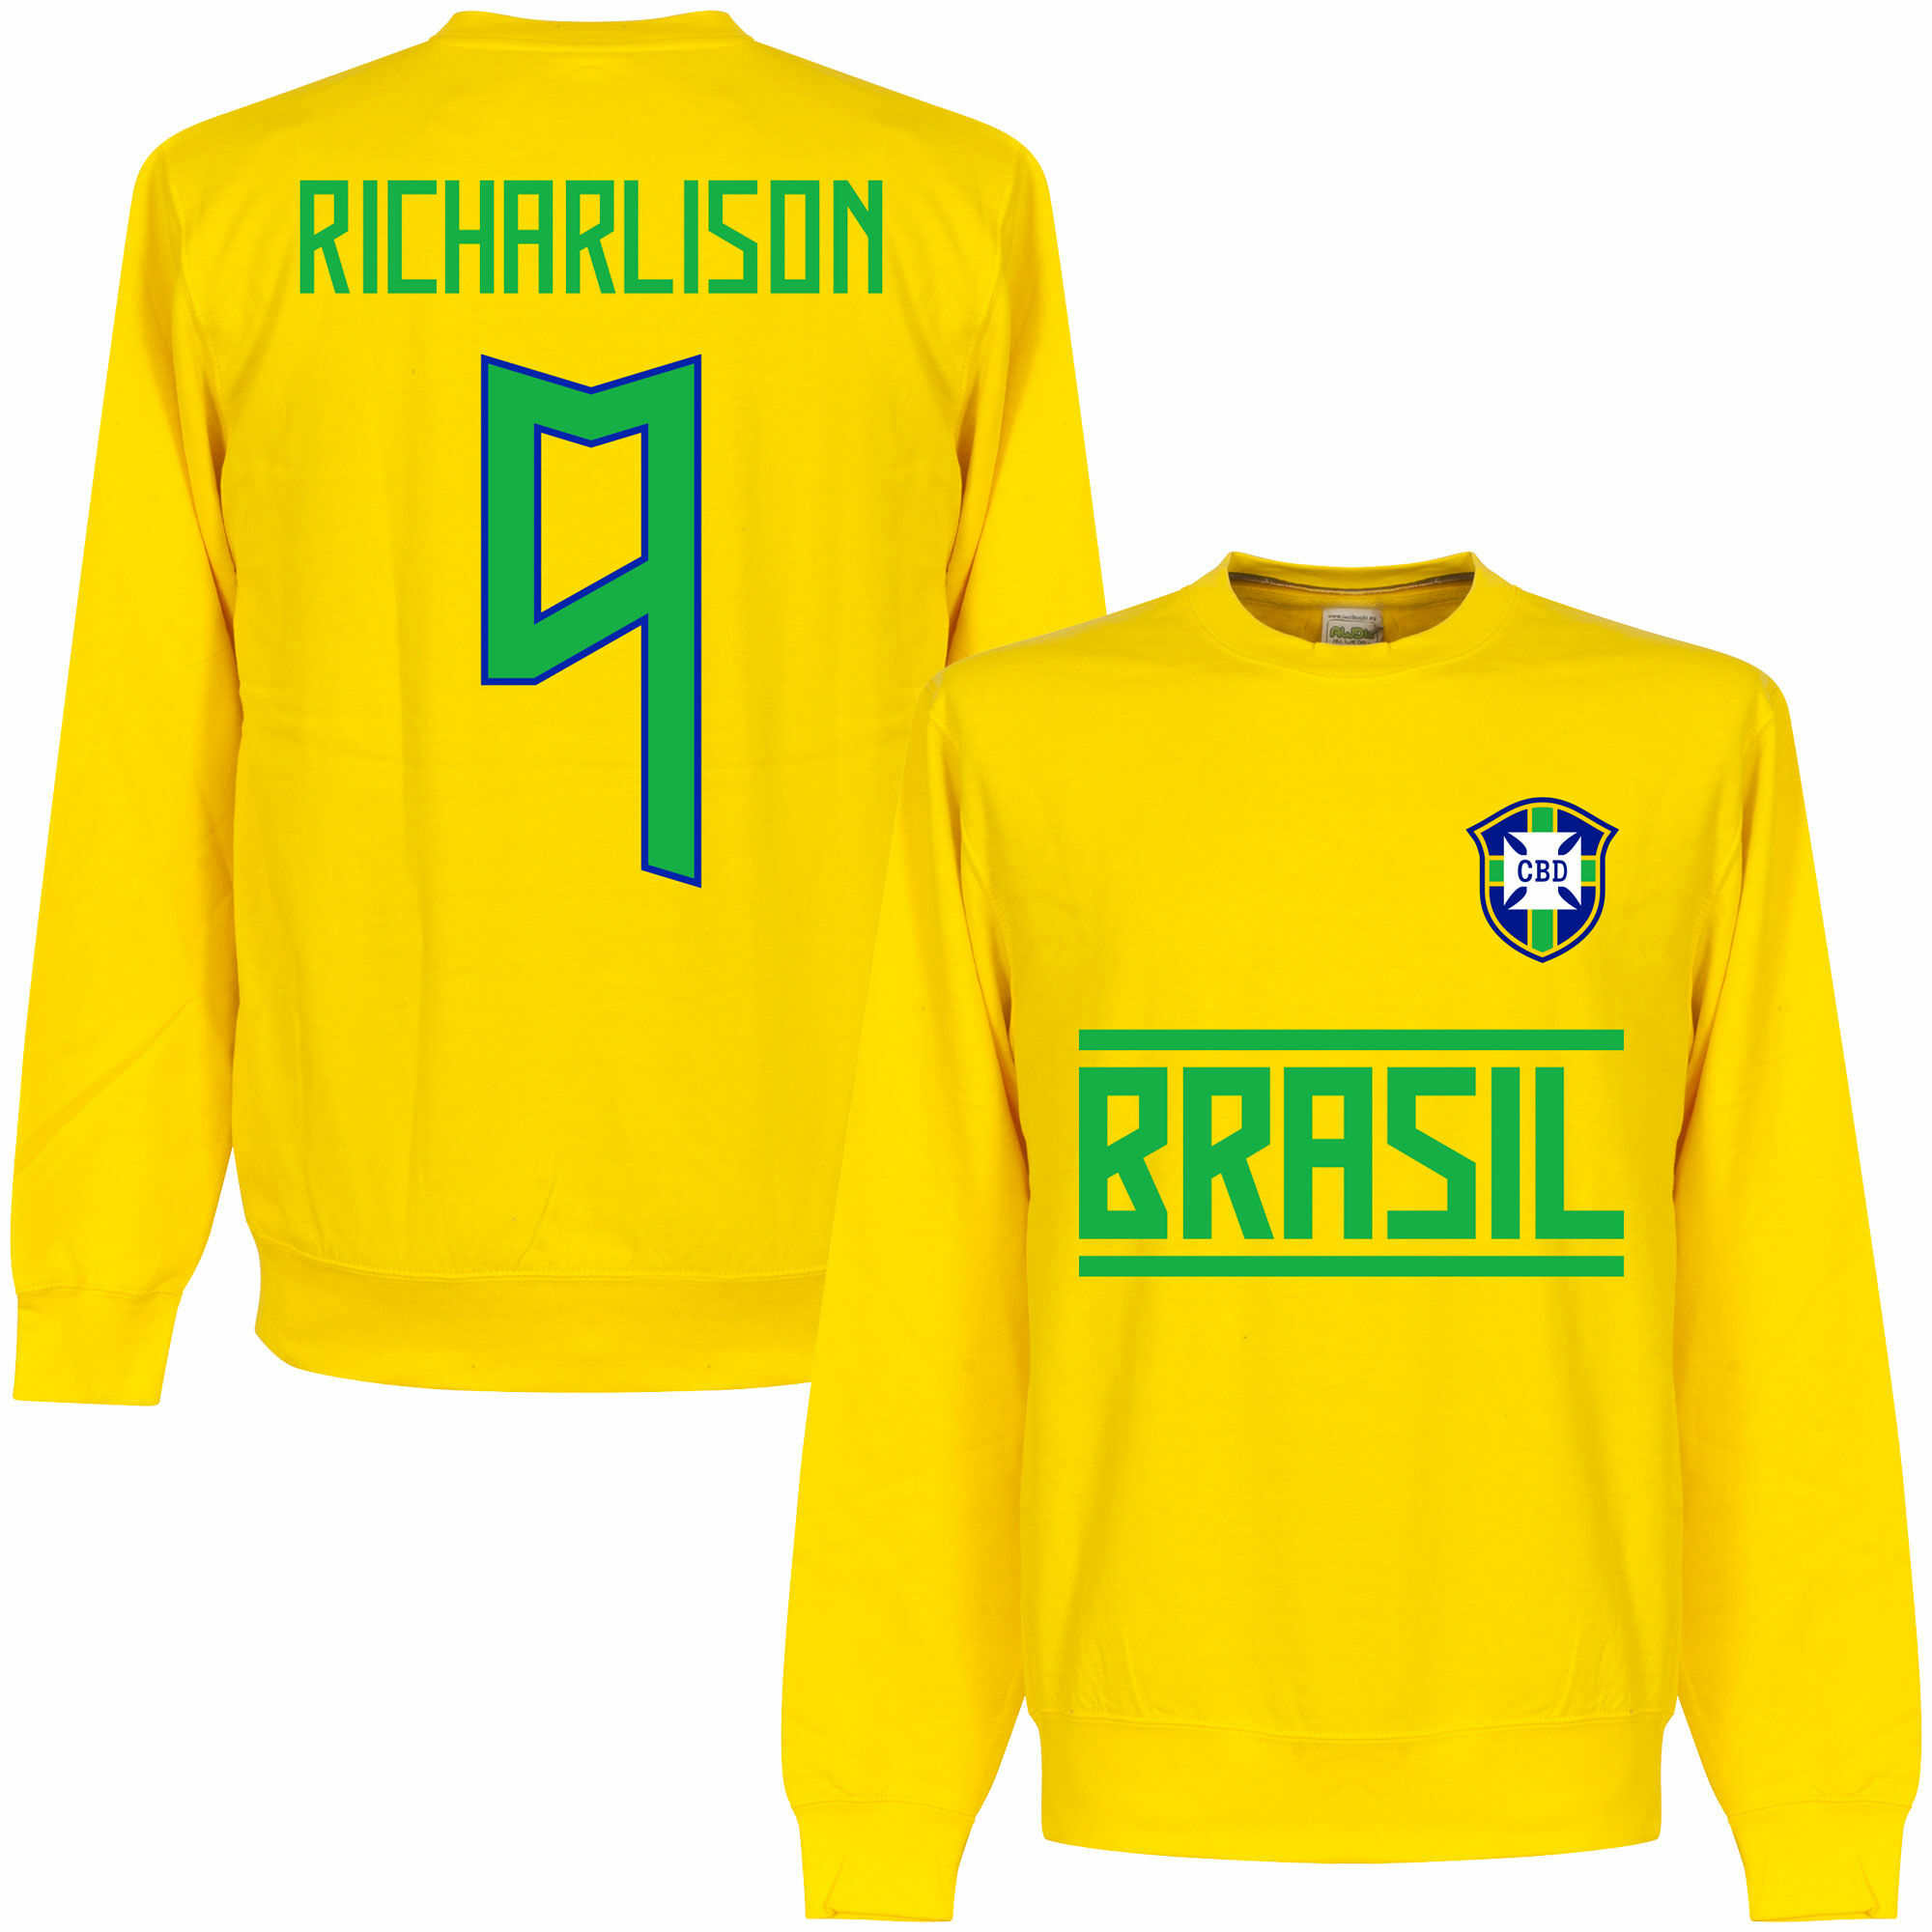 Brazílie - Mikina - Richarlison, žlutá, číslo 9